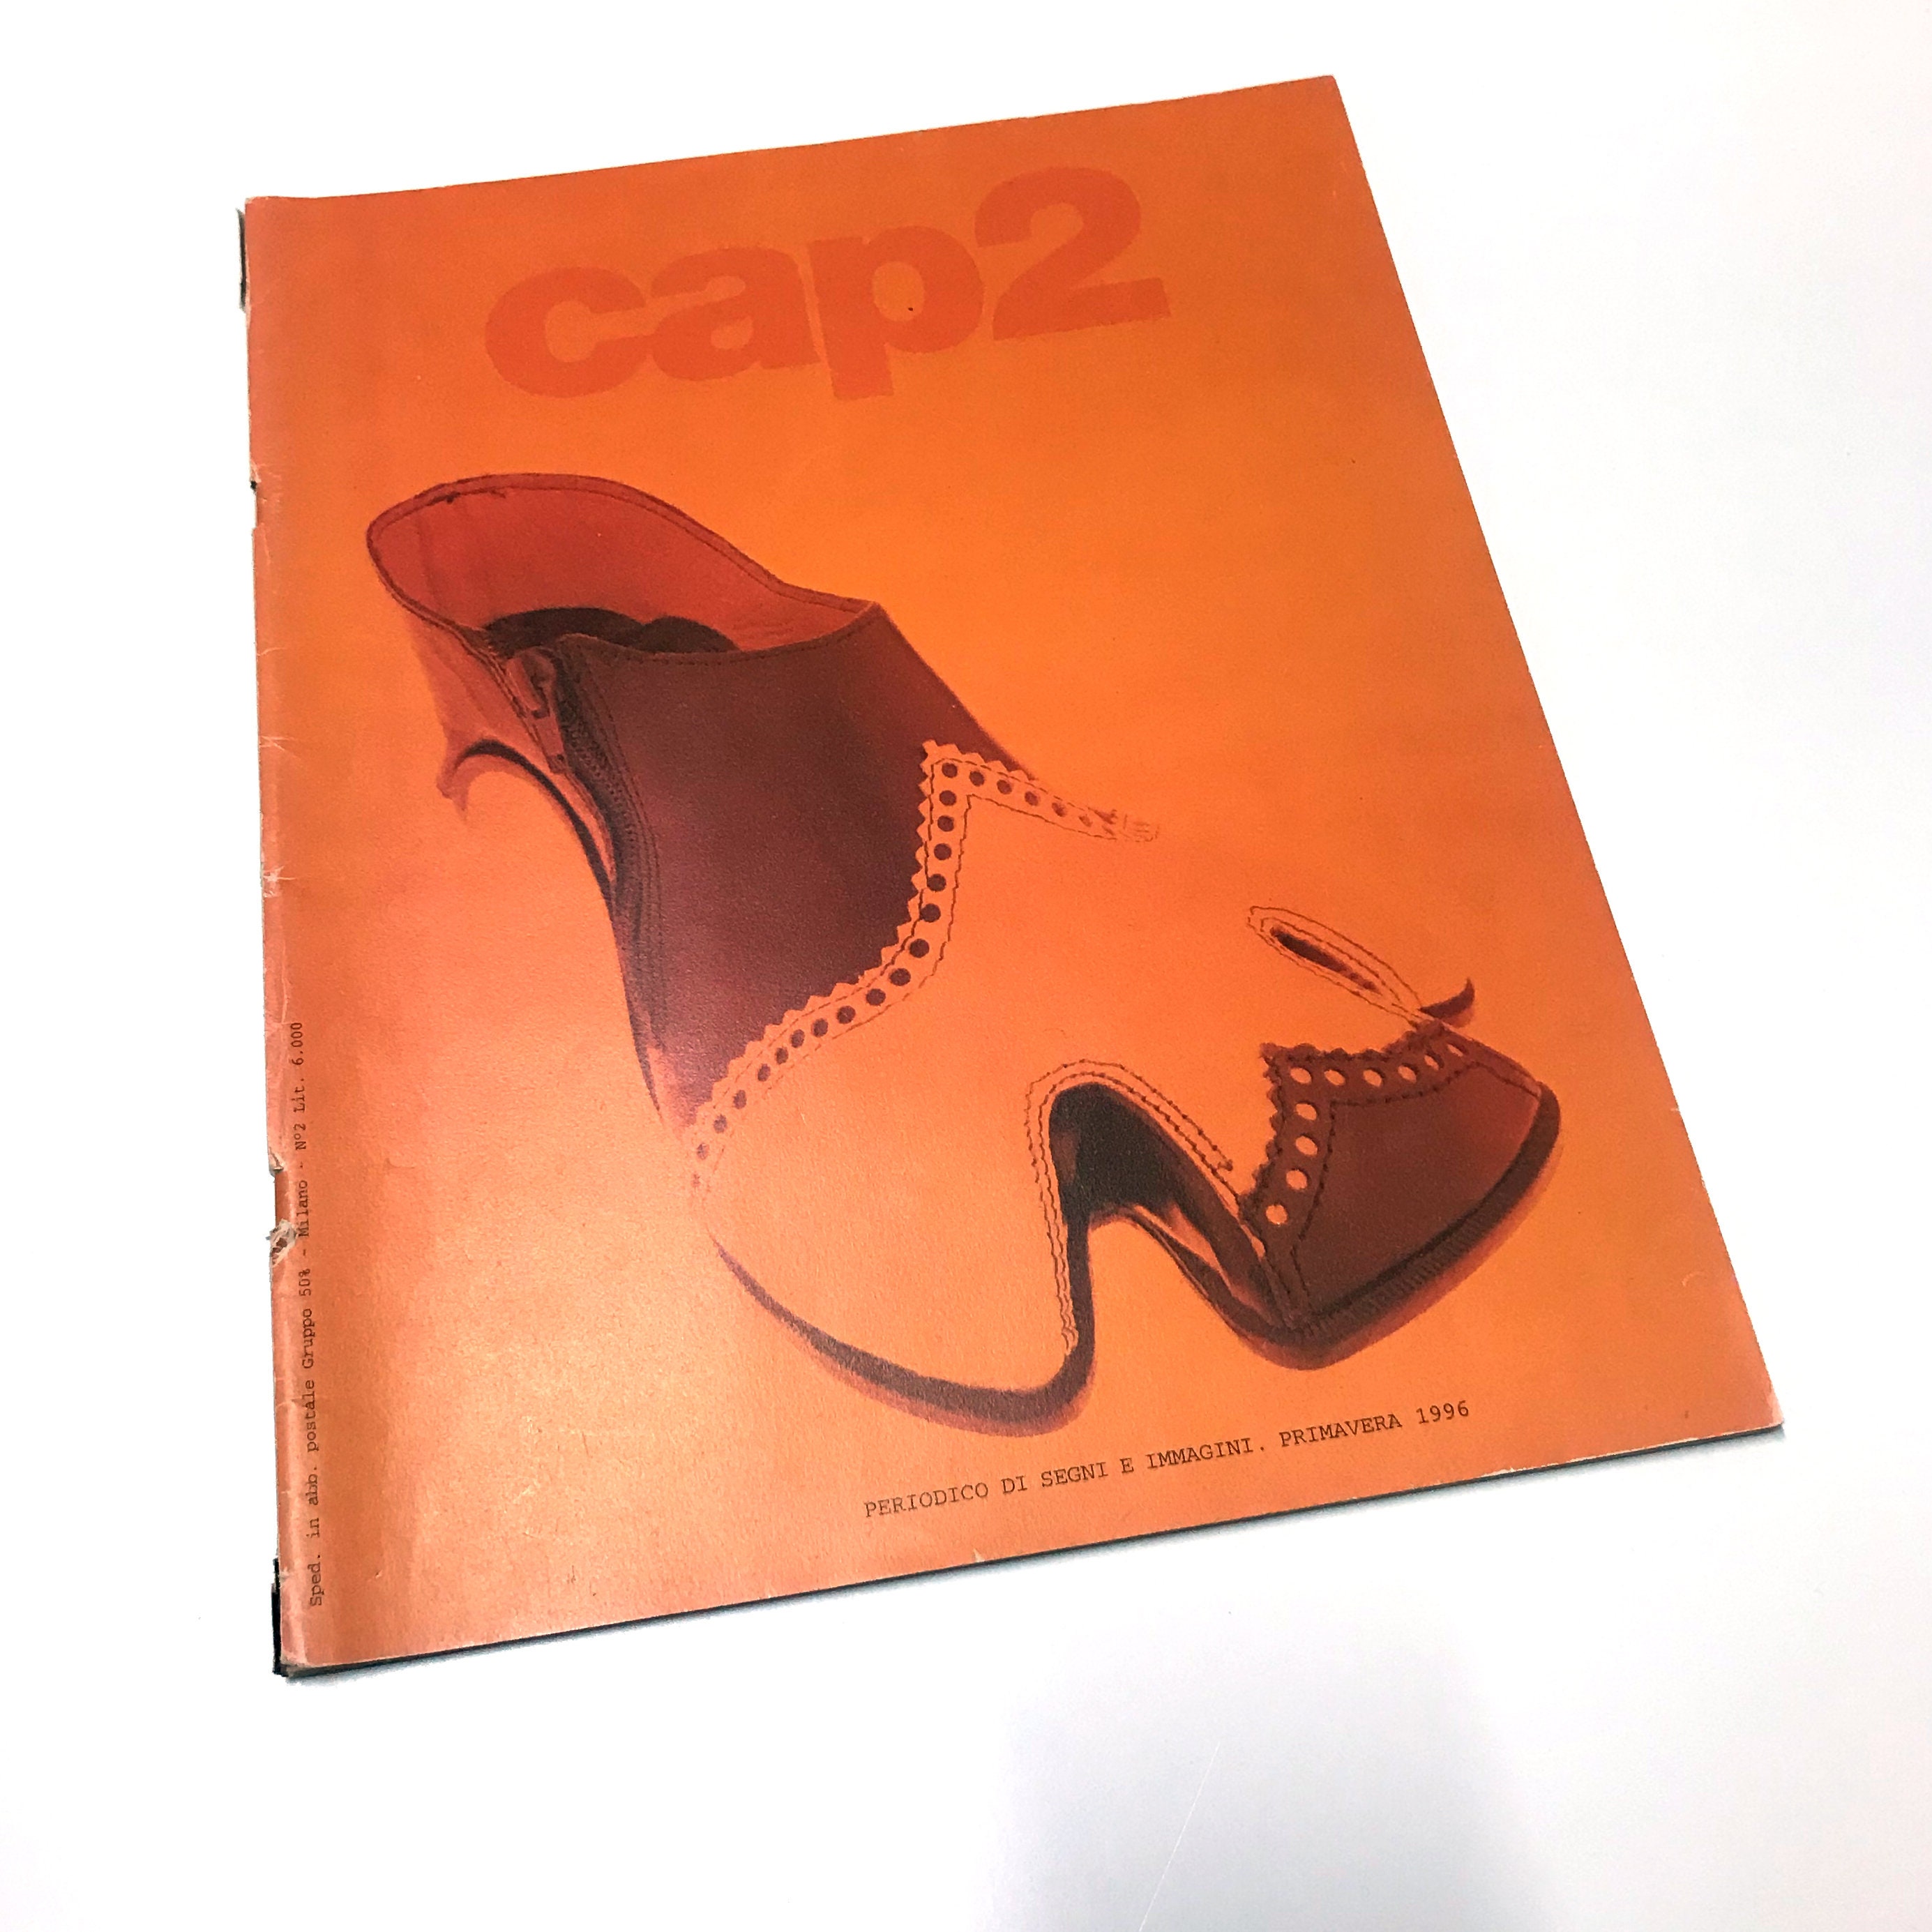 Vintage Magazine Cap2 an Cap4 by Cappellini 1995, Milan / Italy - Etsy